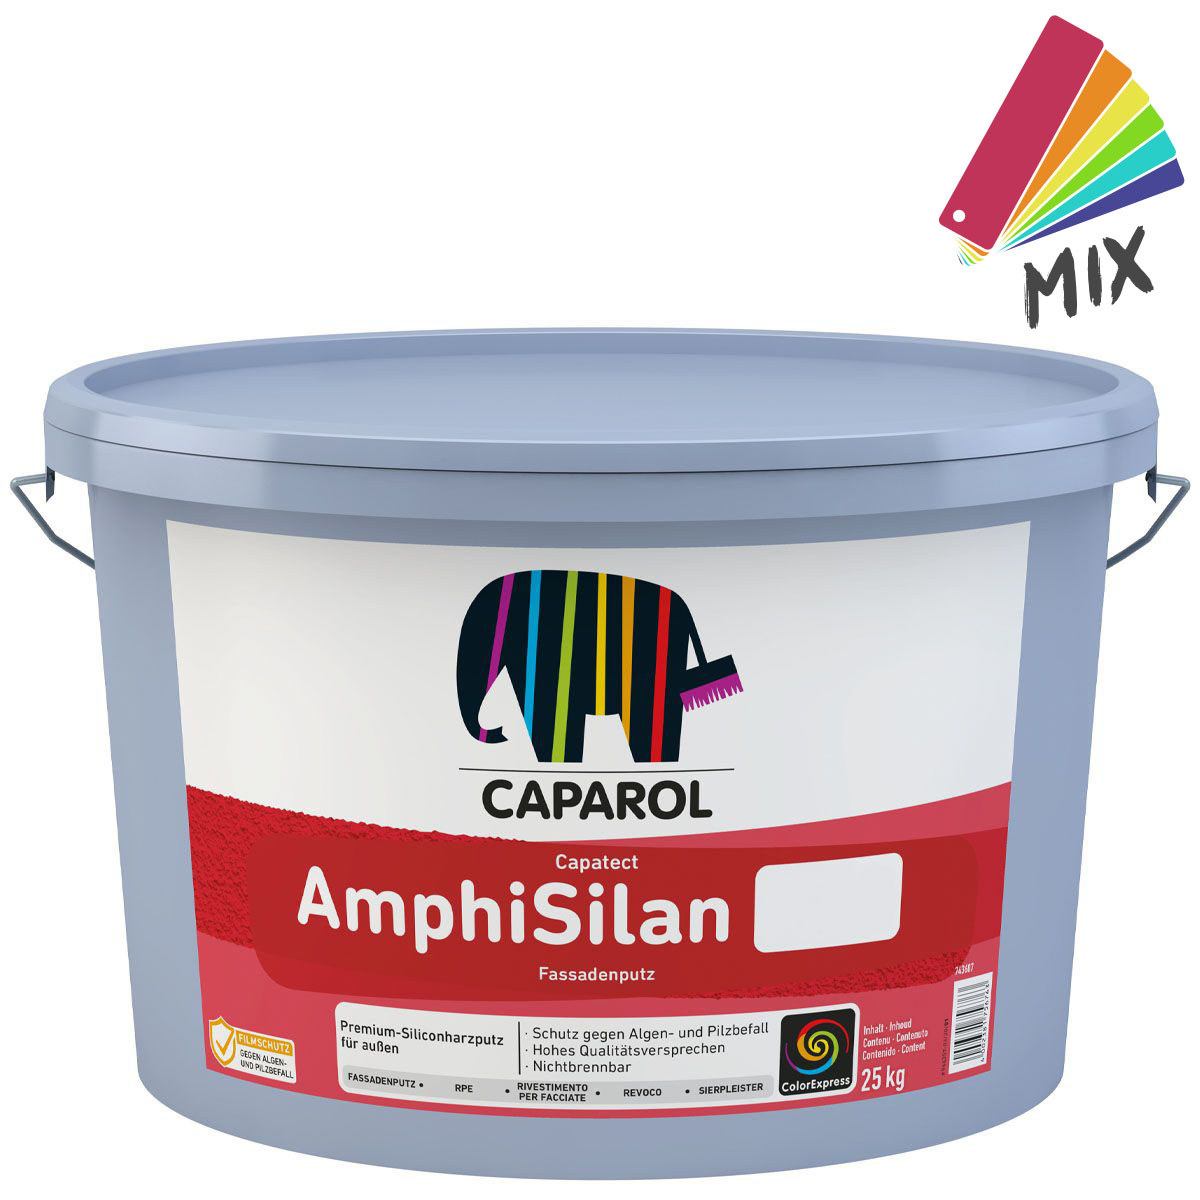 Caparol Capatect AmphiSilan Fassadenputz K15 (1,5mm) 25kg, PG S wunschfarbton